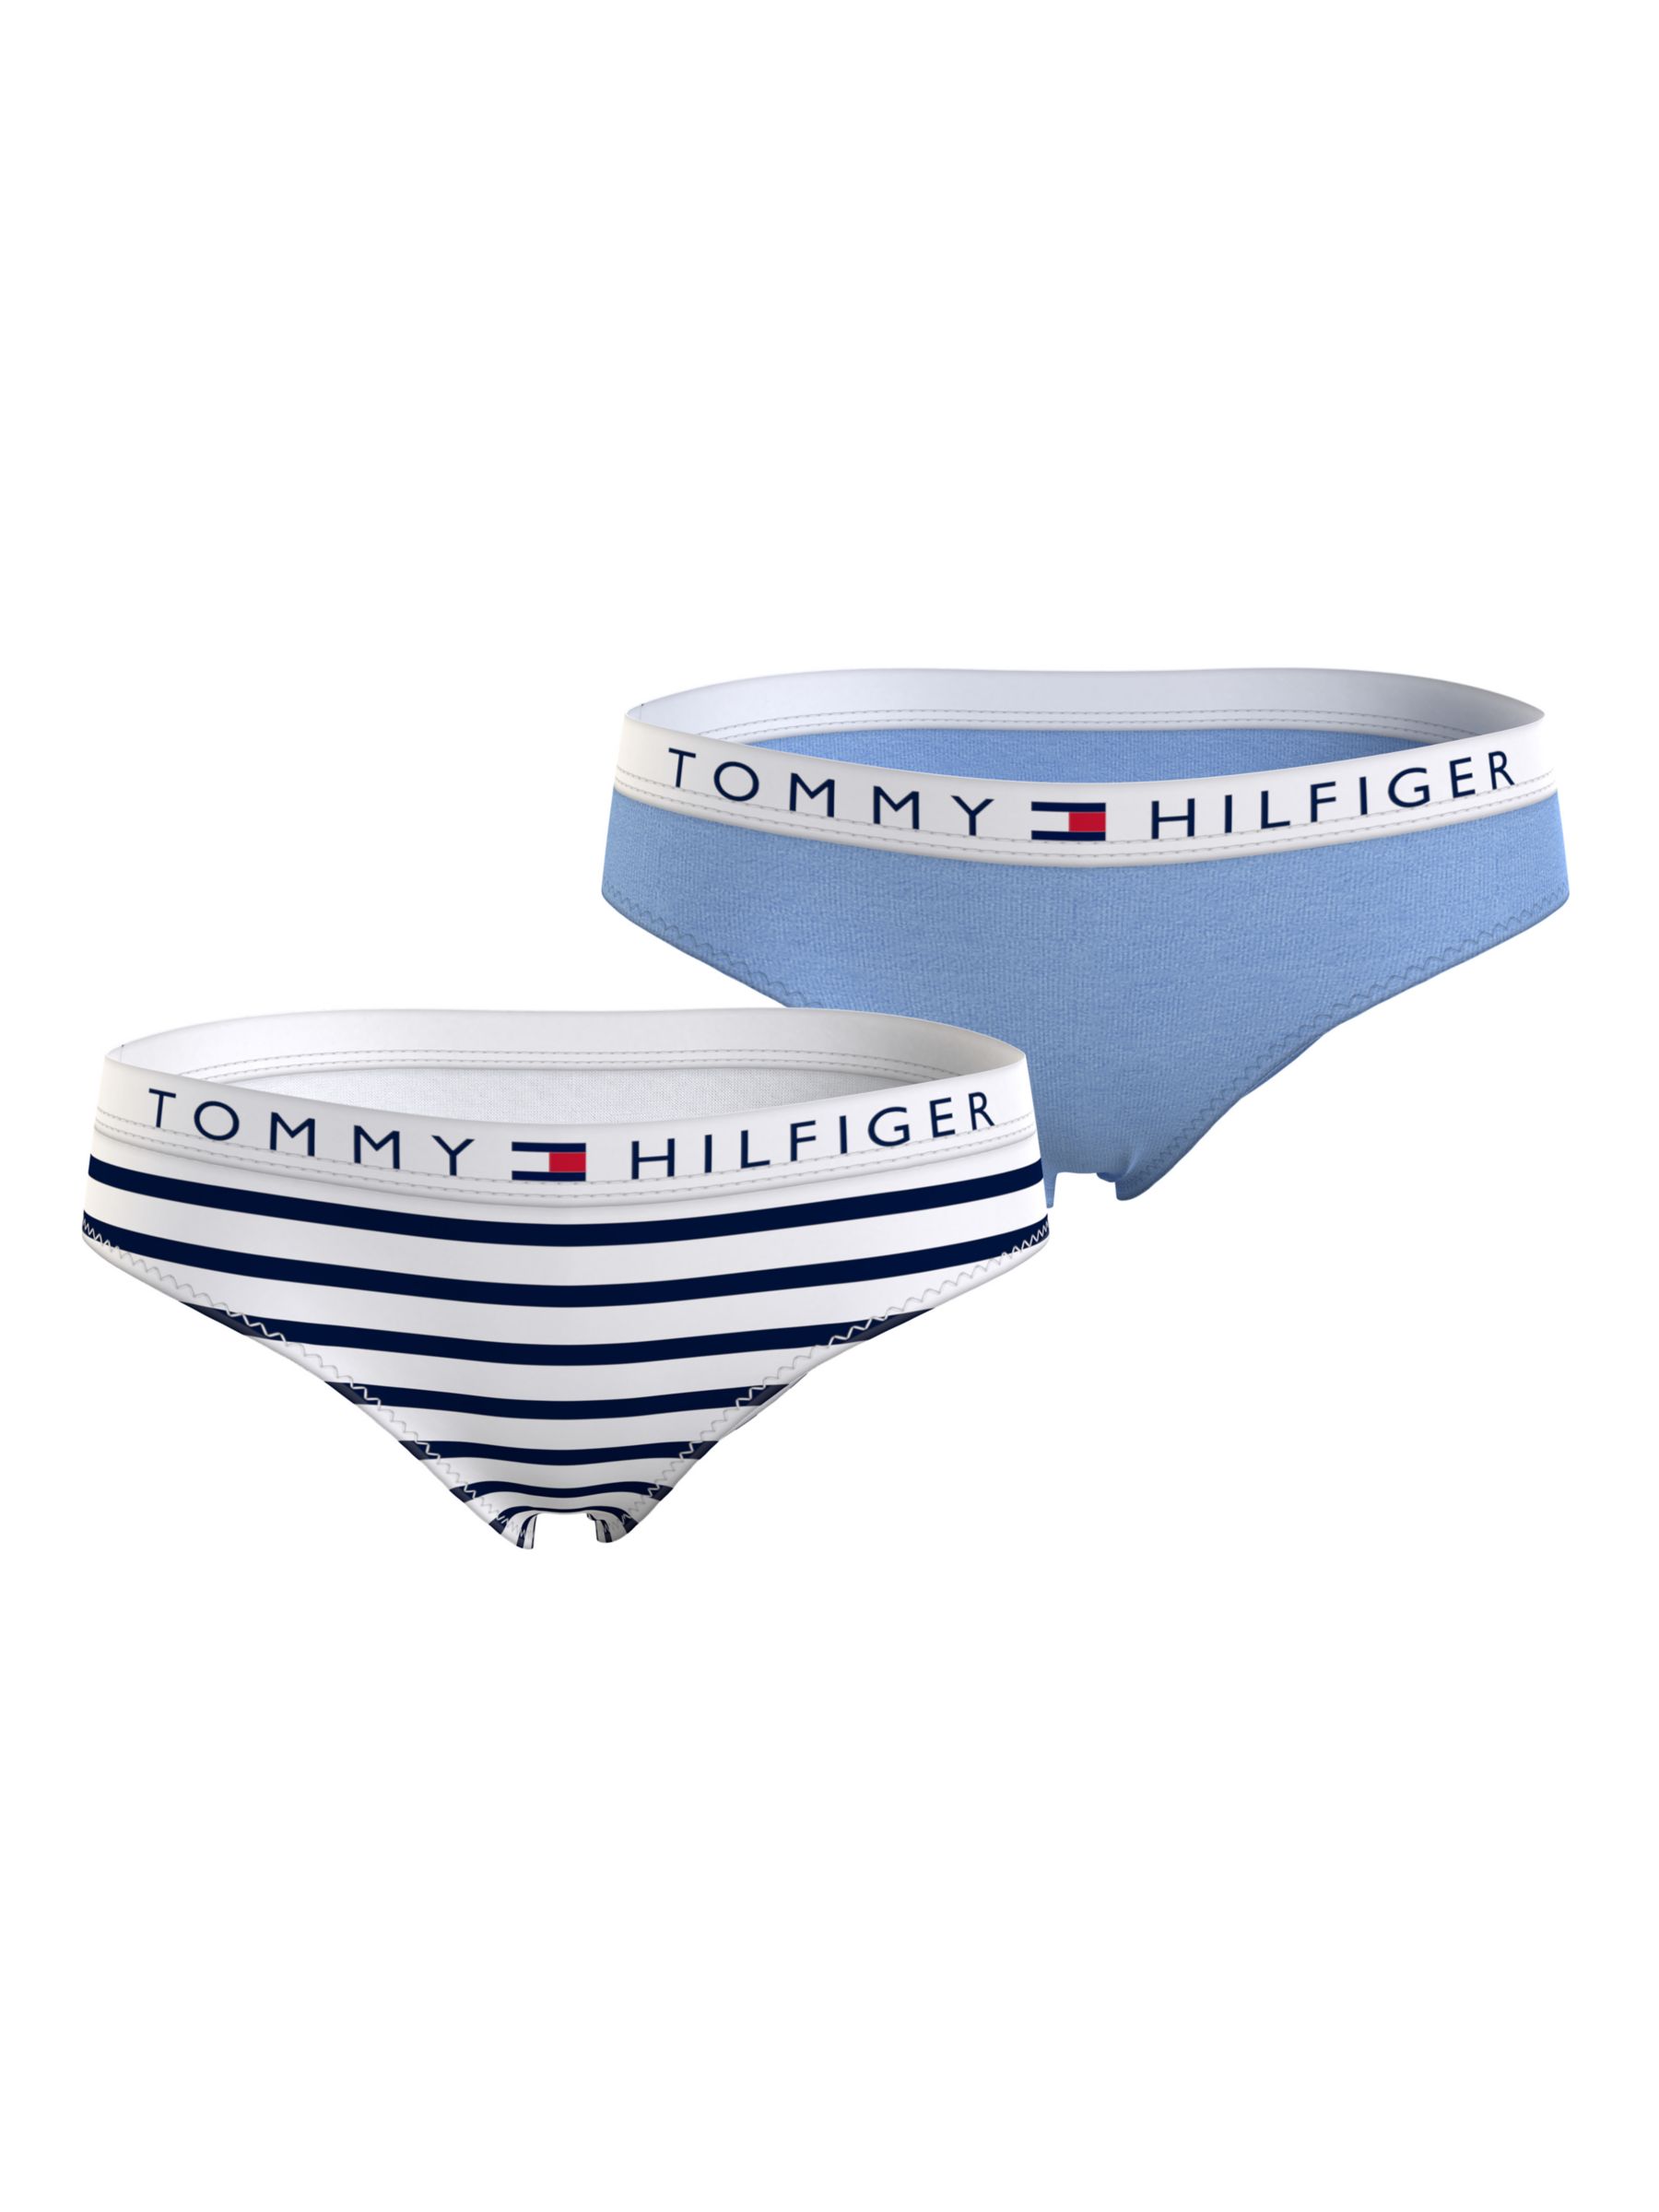 Tommy Hilfiger Kids\' Logo Bikini Briefs, Pack of 2, Desert Sky/Multi, 8-10  years